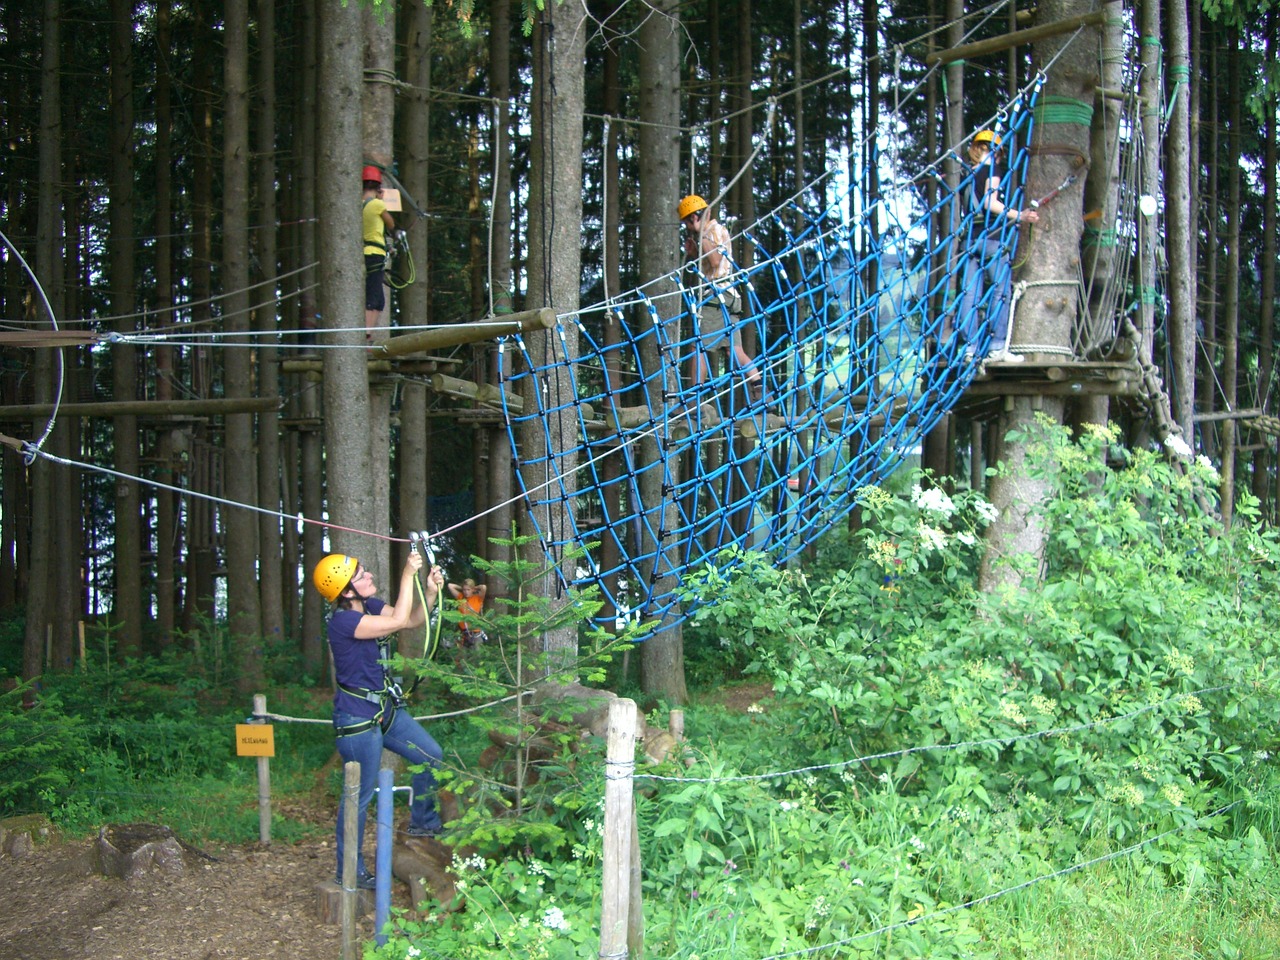 high-ropes-course-gfb9a1b3b9_1280